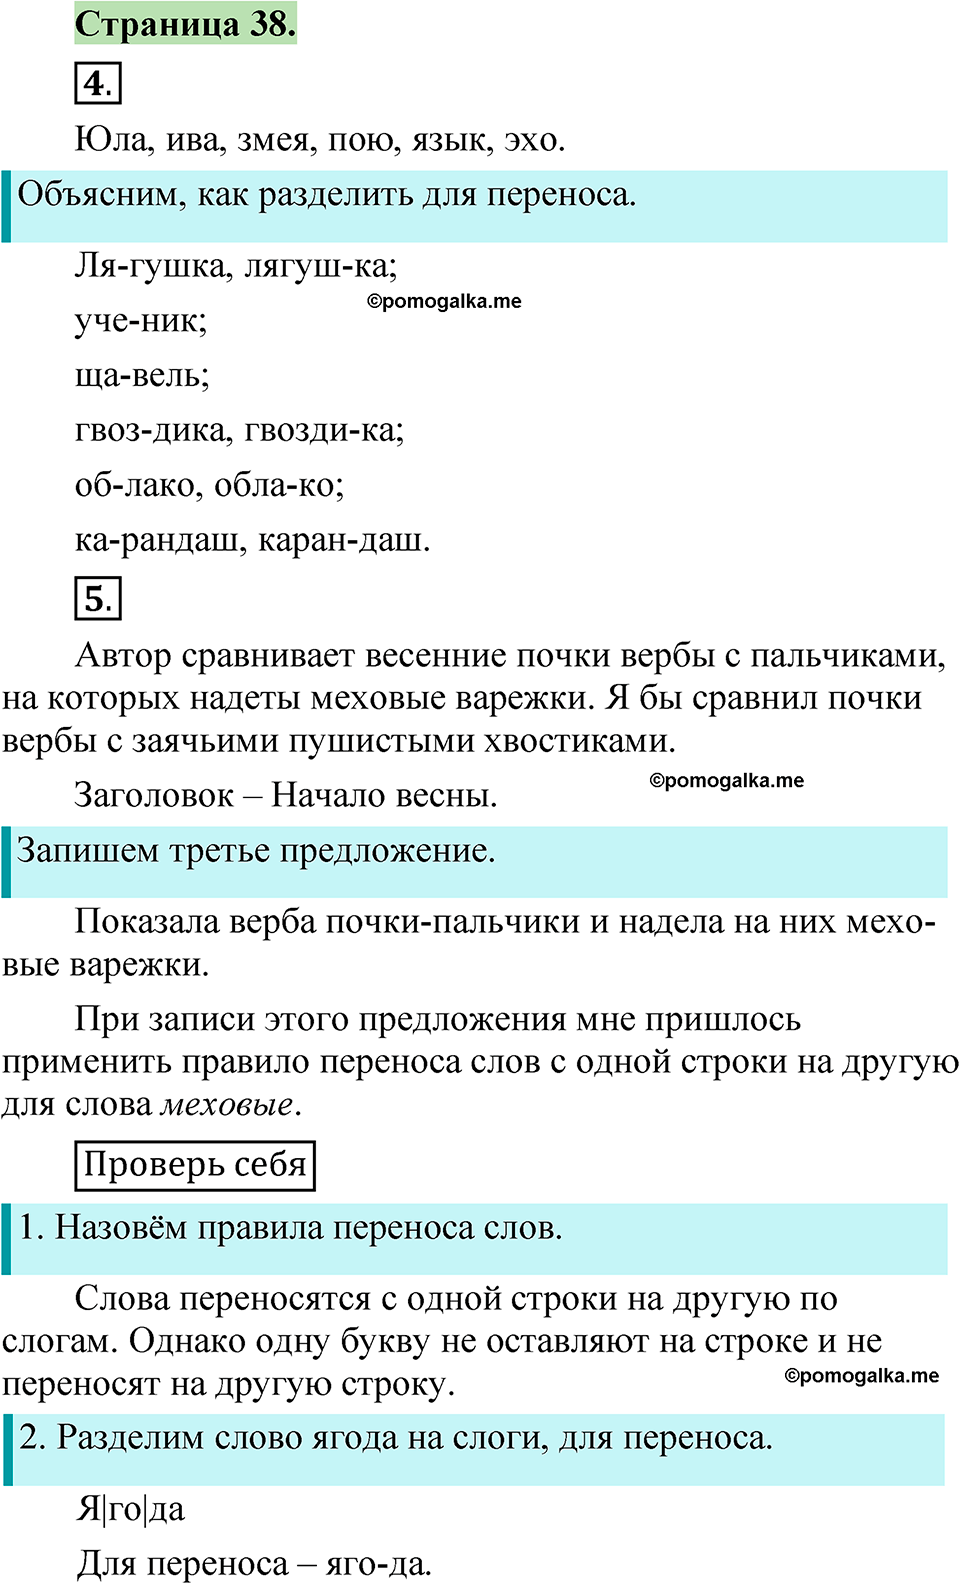 страница 38 русский язык 1 класс Канакина 2023